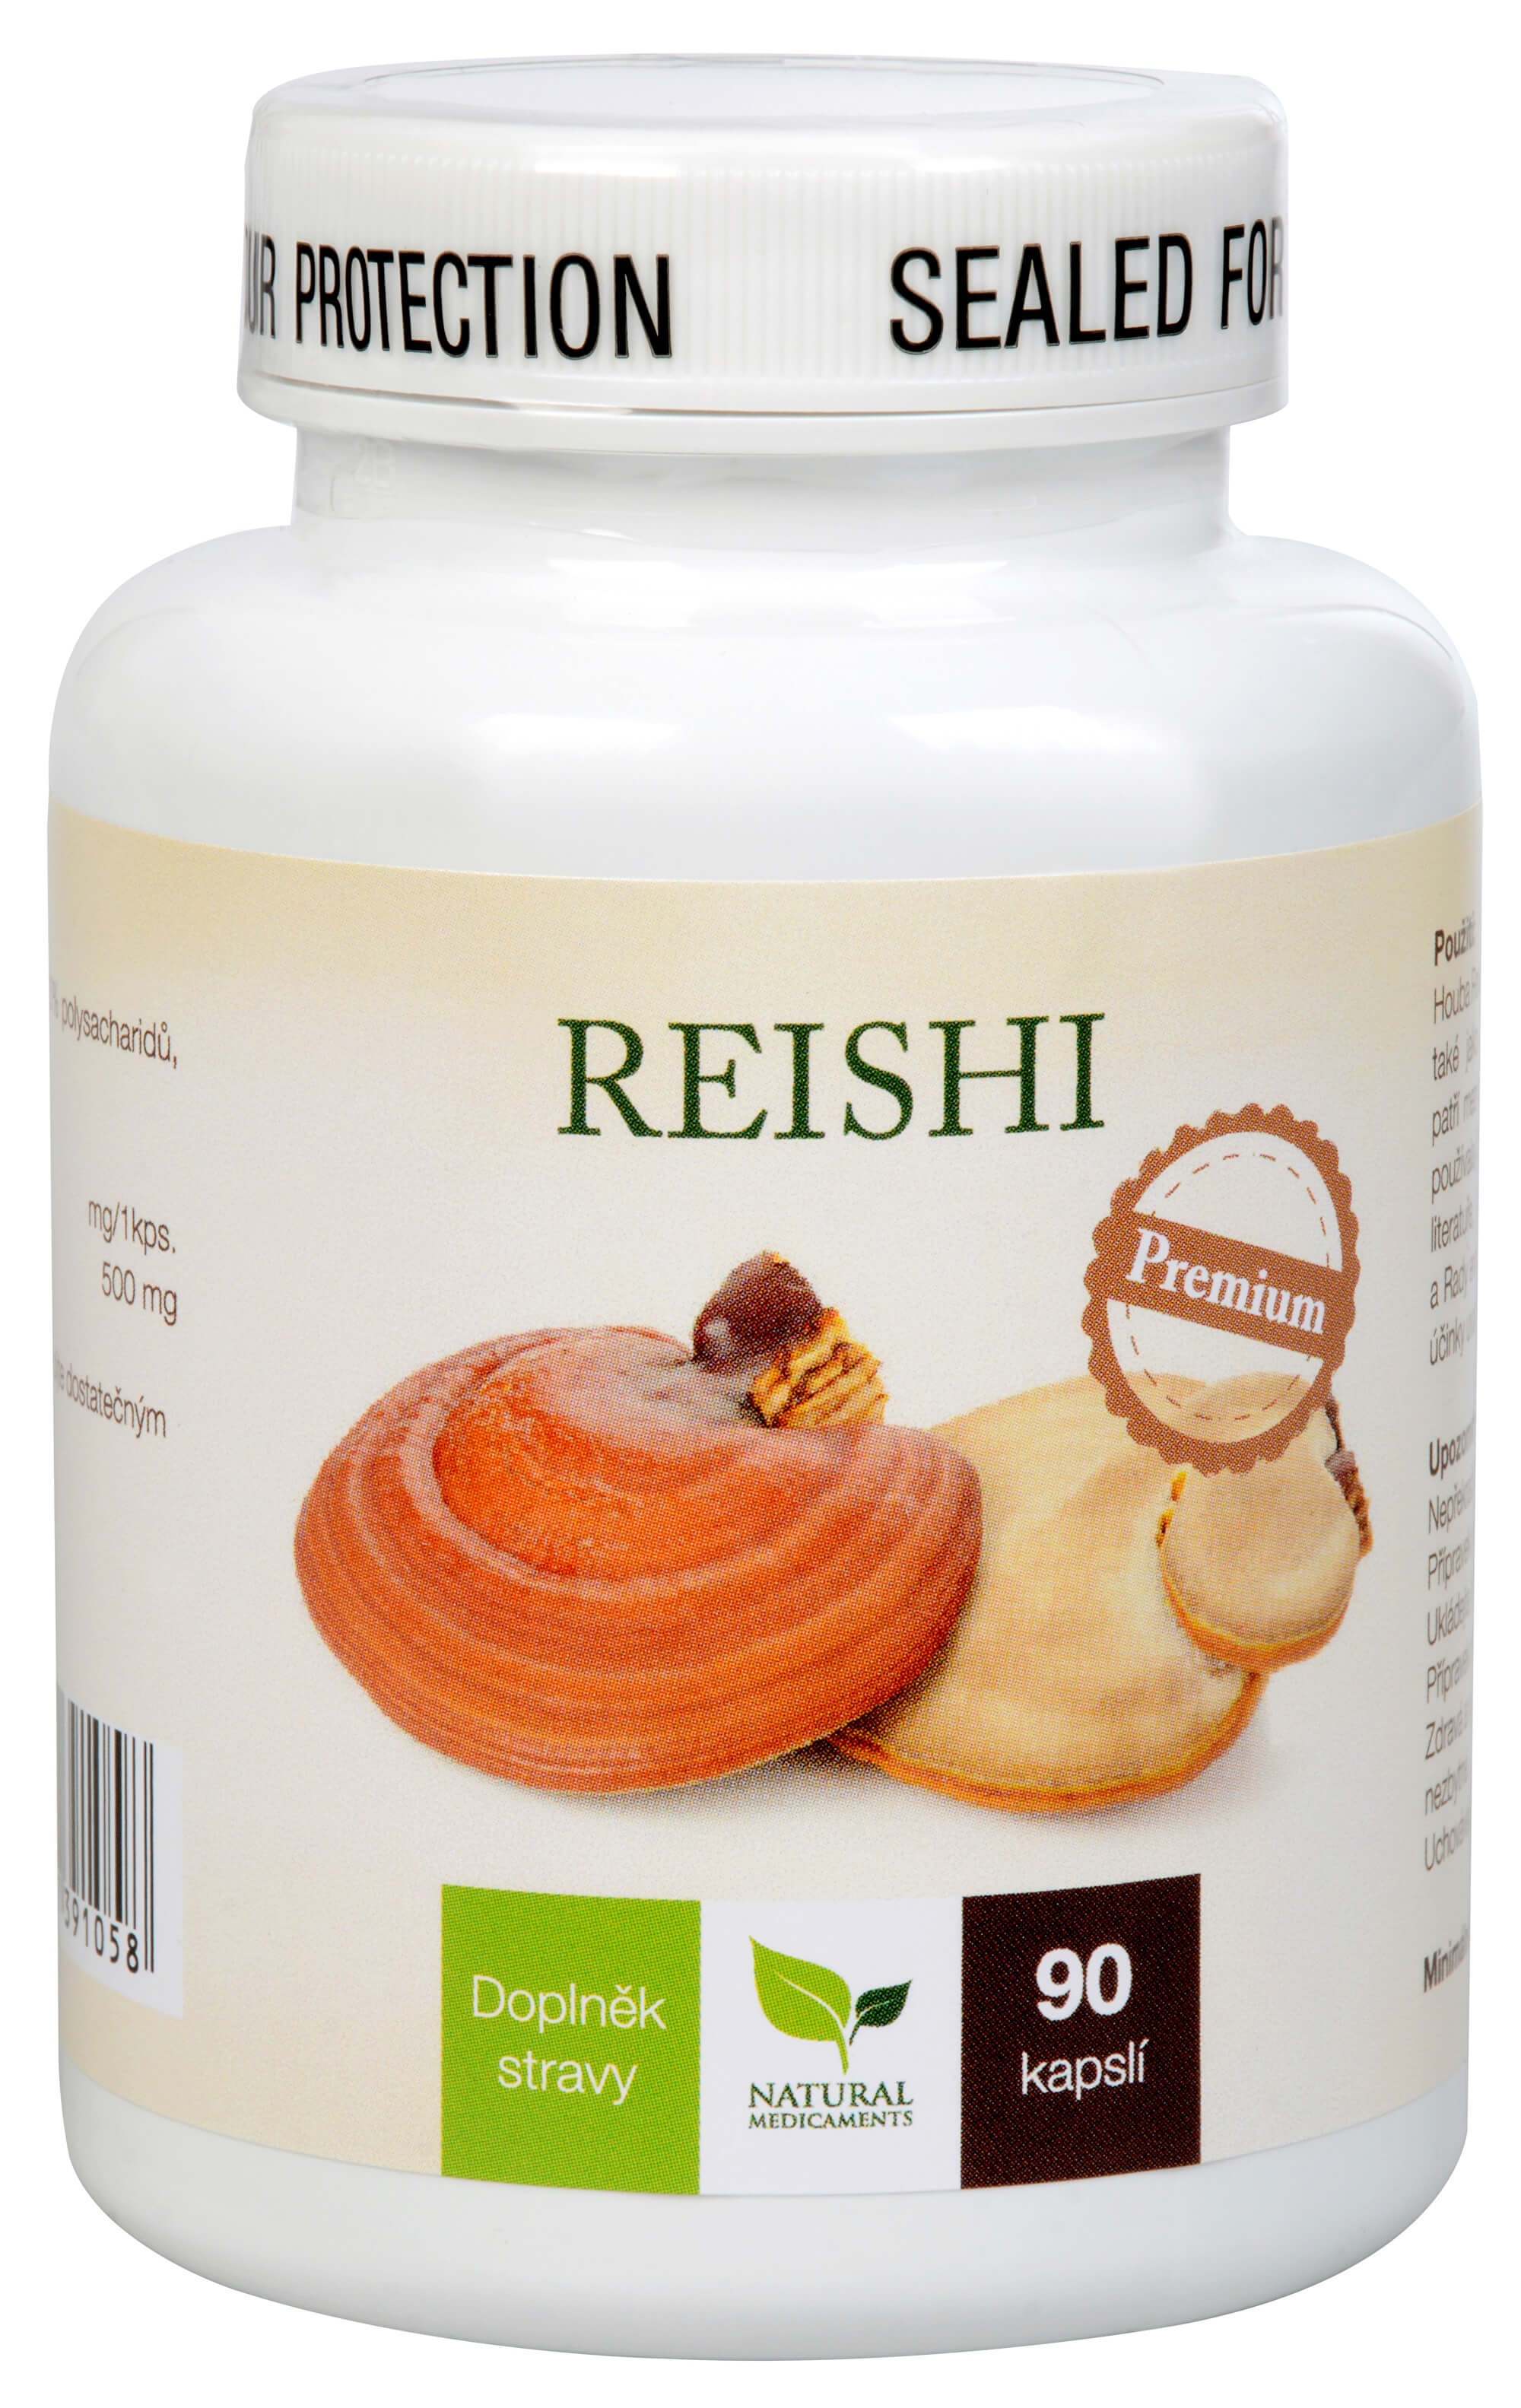 Natural Medicaments Reishi Premium 90 kapsúl